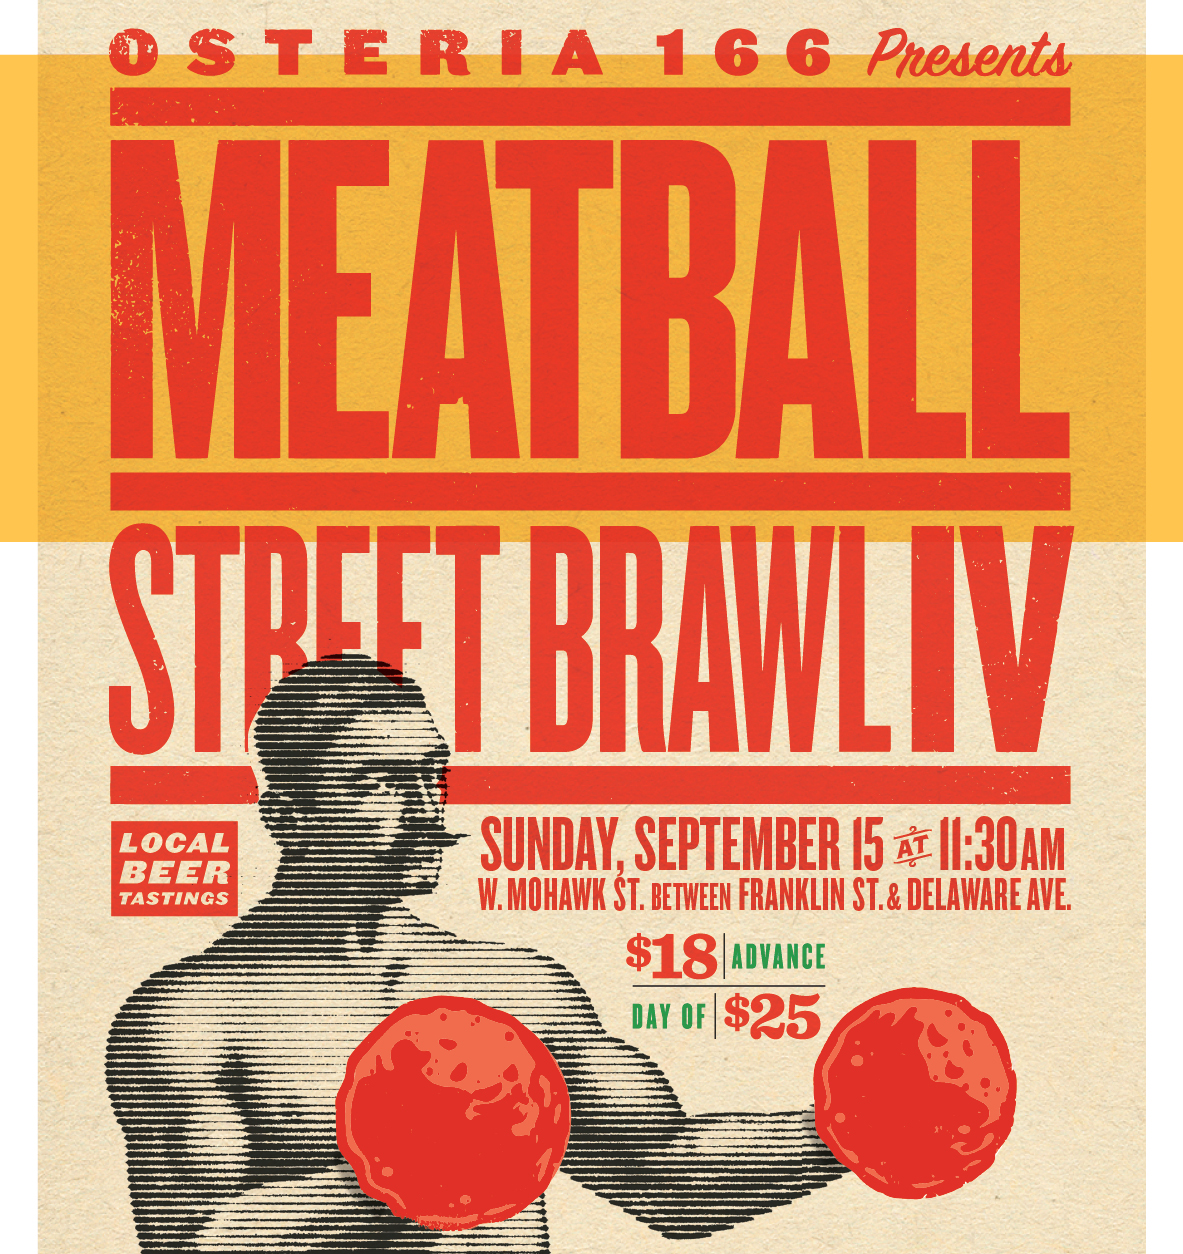 Meatball Street Brawl IV